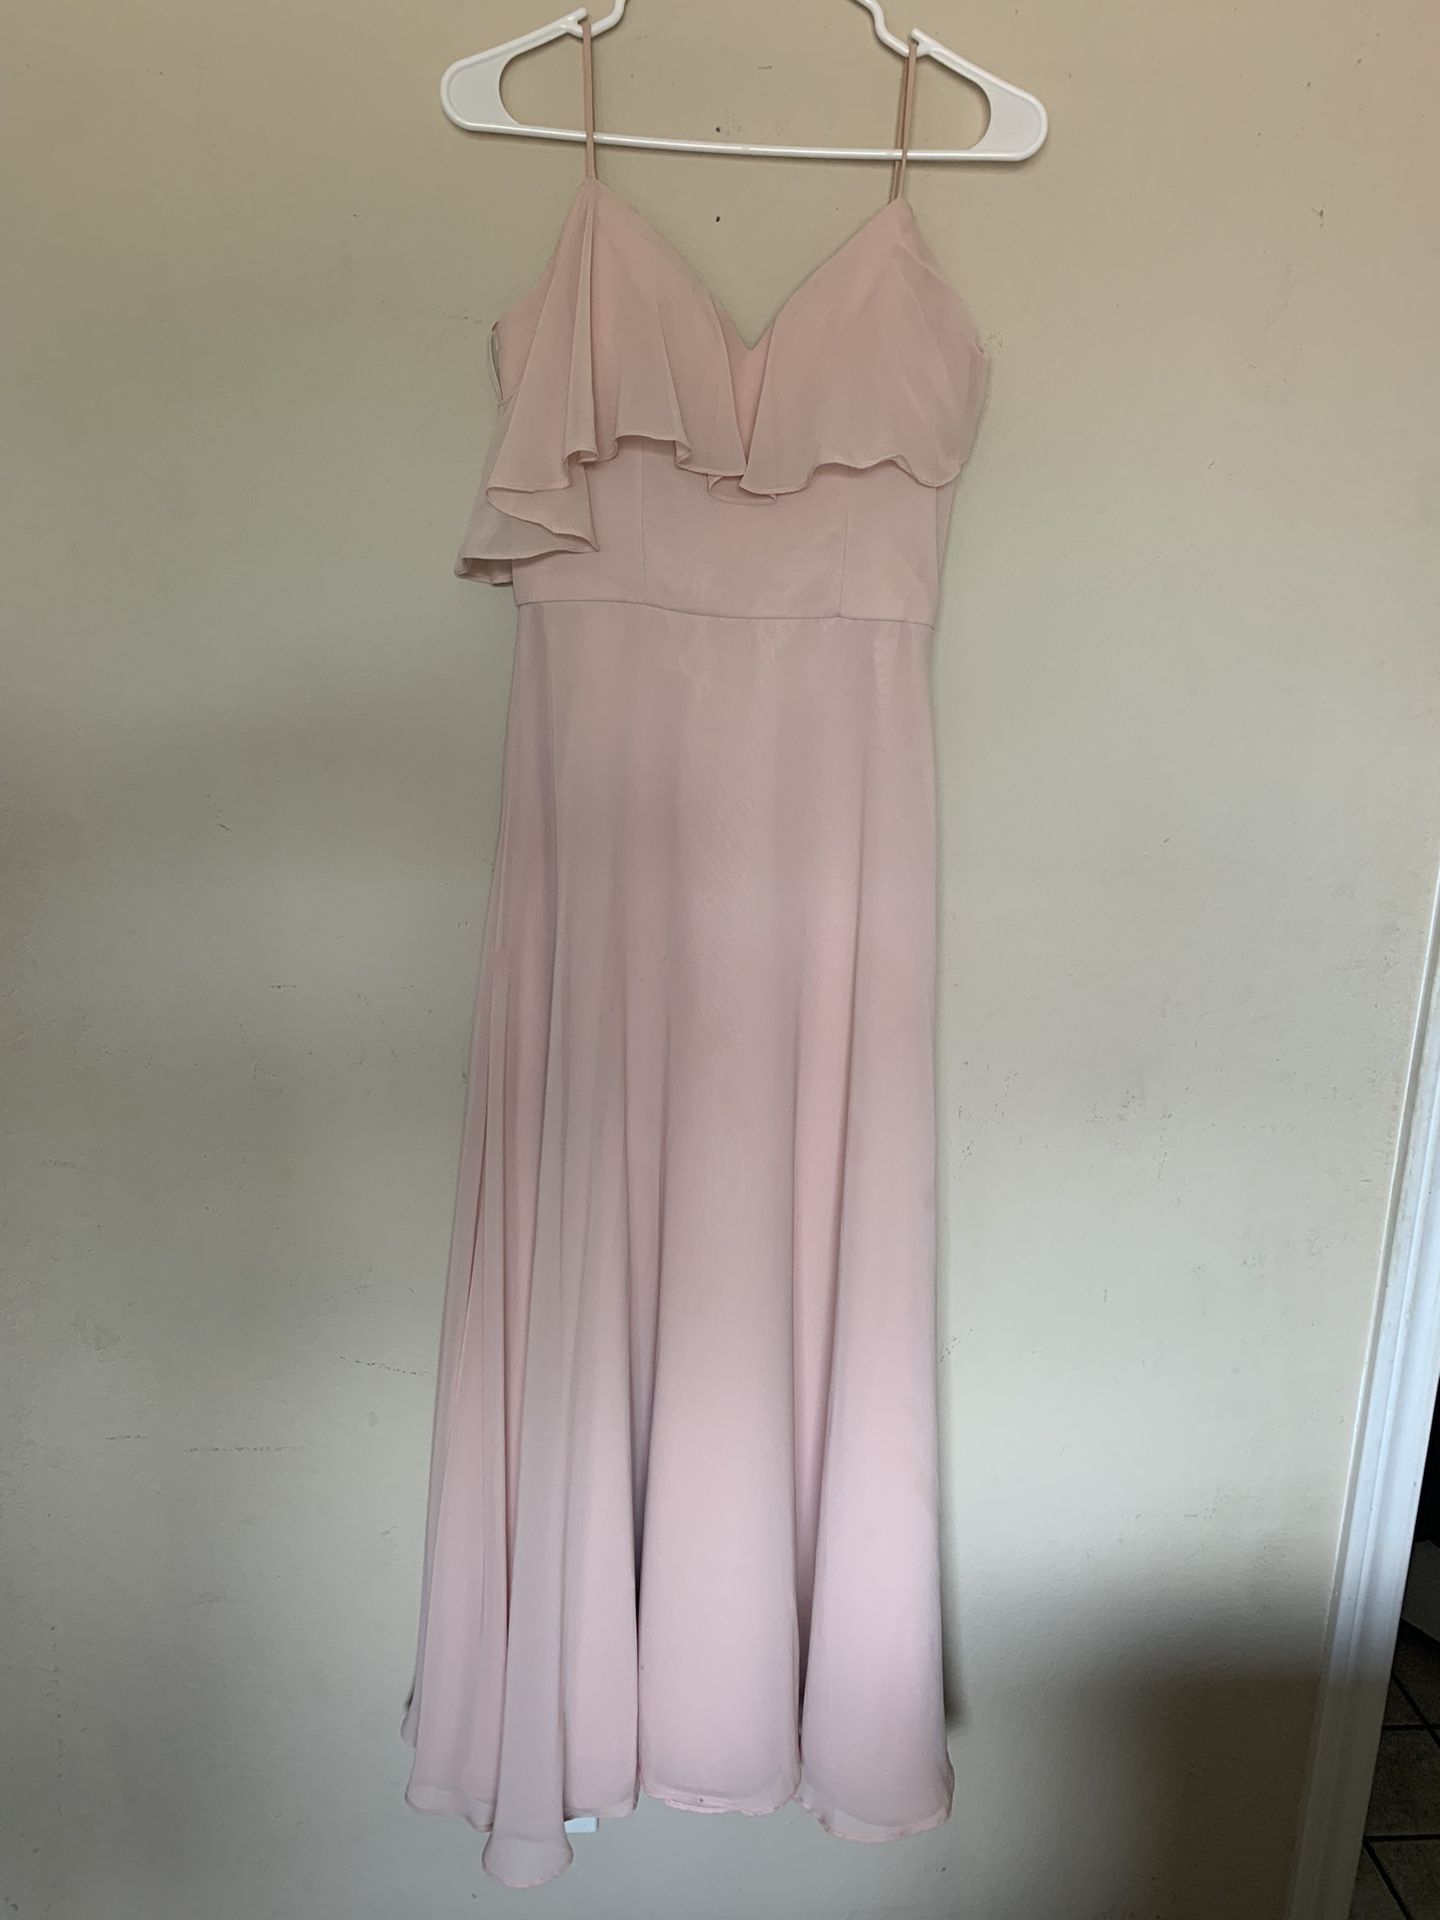 Pink Prom Dress